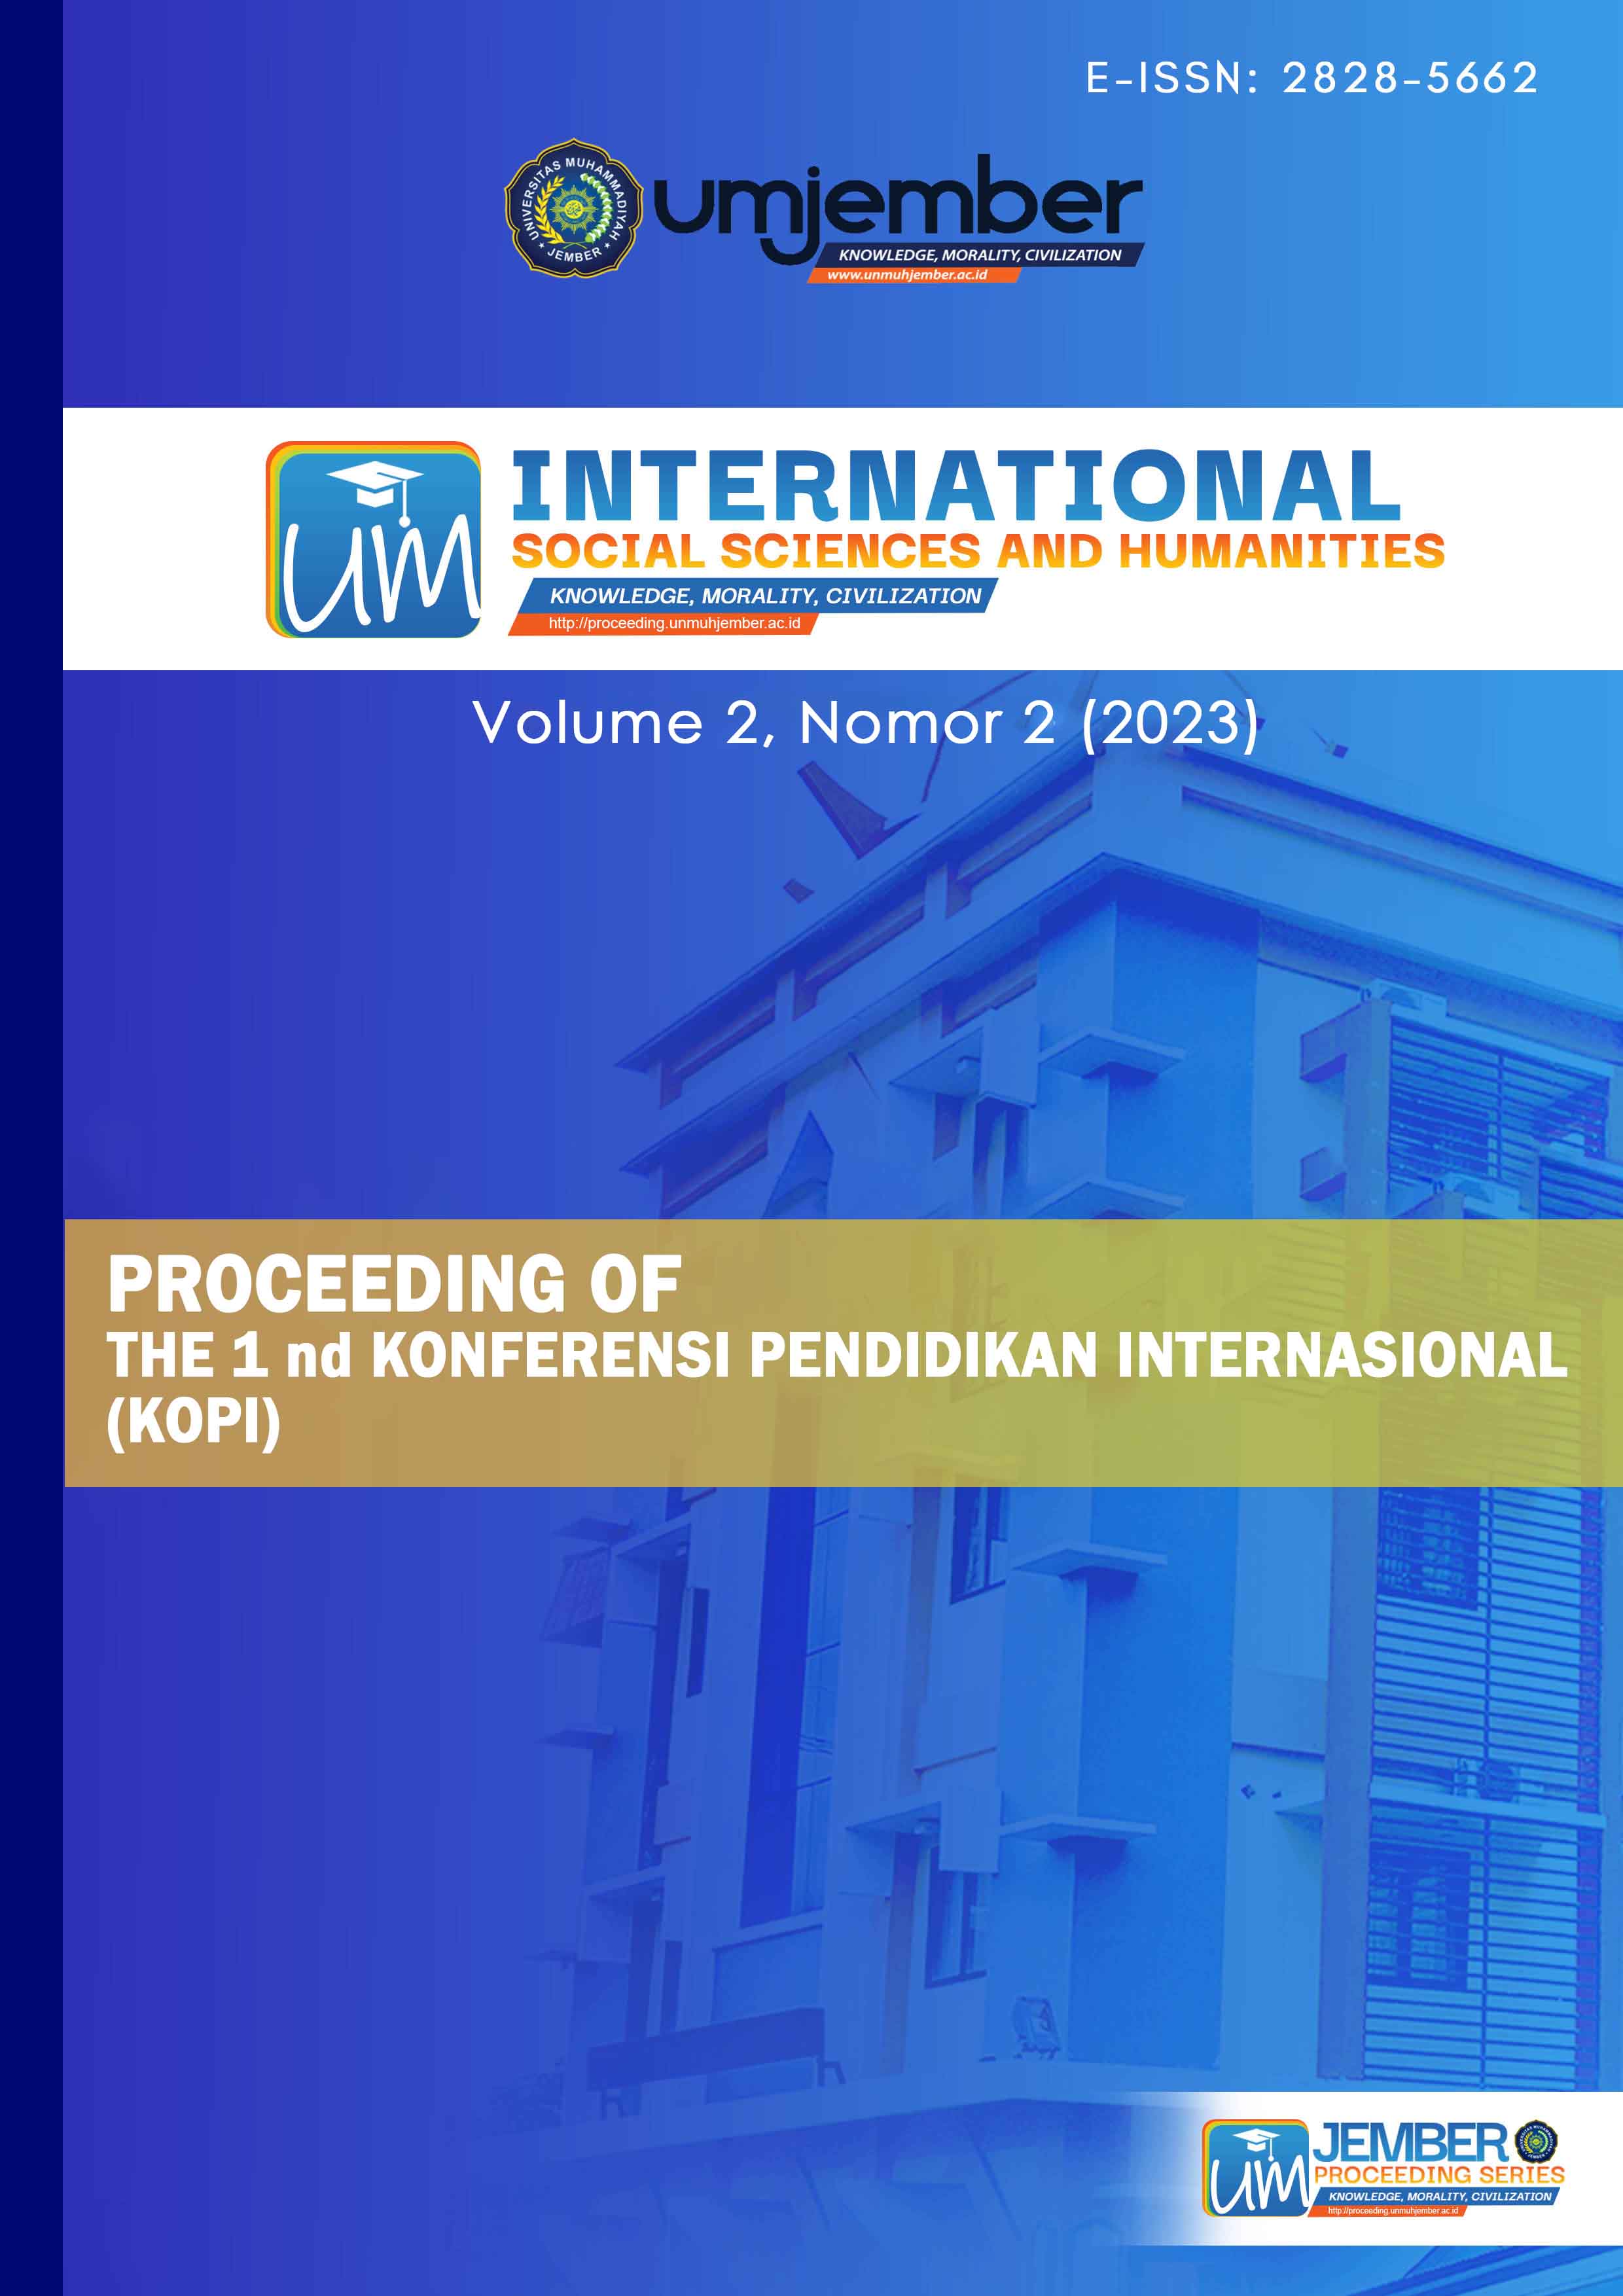 					View Vol. 2 No. 2 (2023): Proceedings of Konferensi Pendidikan Internasional (KOPI)
				